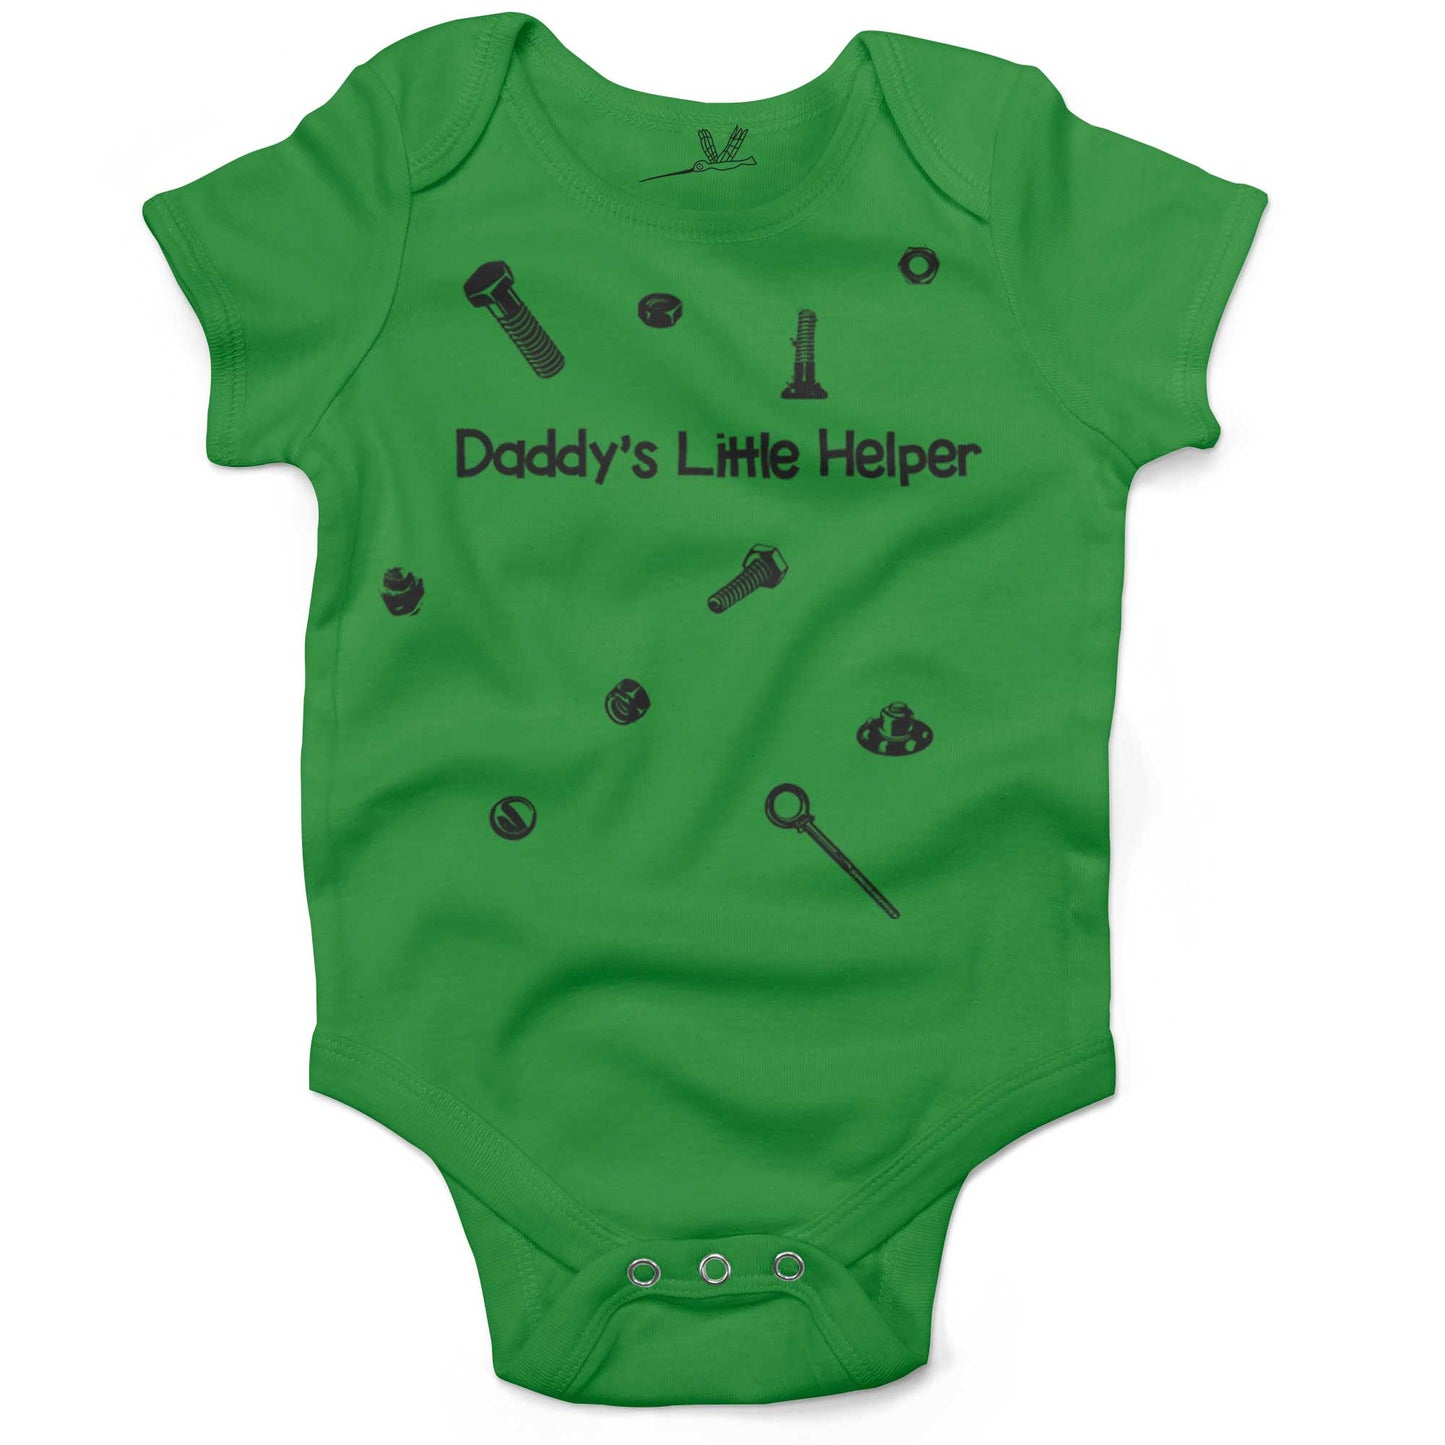 Daddy's Little Helper Infant Bodysuit or Raglan Baby Tee-Grass Green-3-6 months